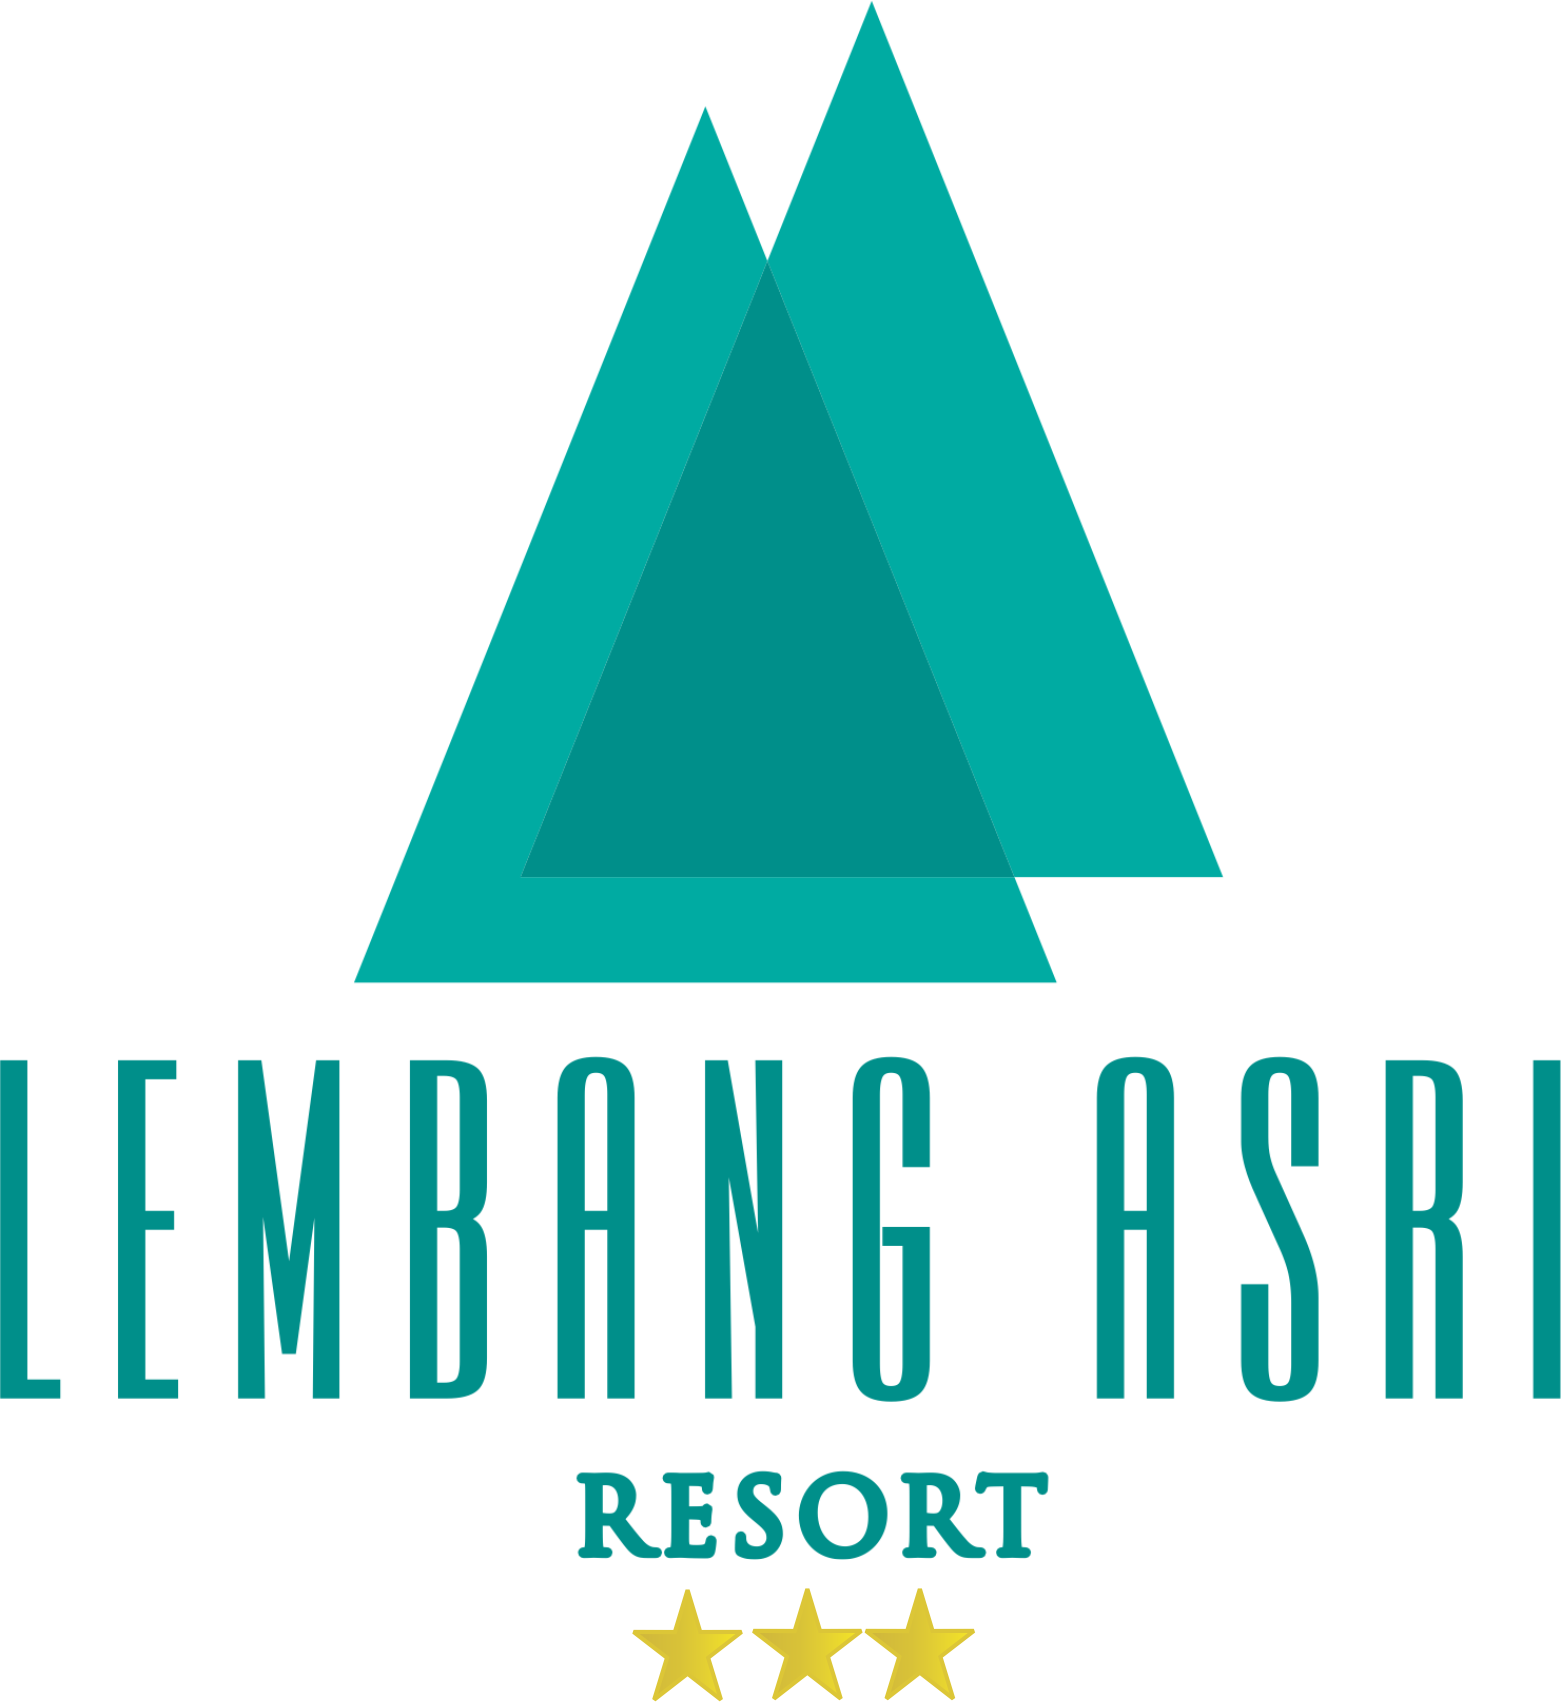 Loker Staf Hotel di Lembang Asri Vista Adhi, Sukajaya, Lembang, Kab. Bandung Barat, Jawa Barat, Indonesia